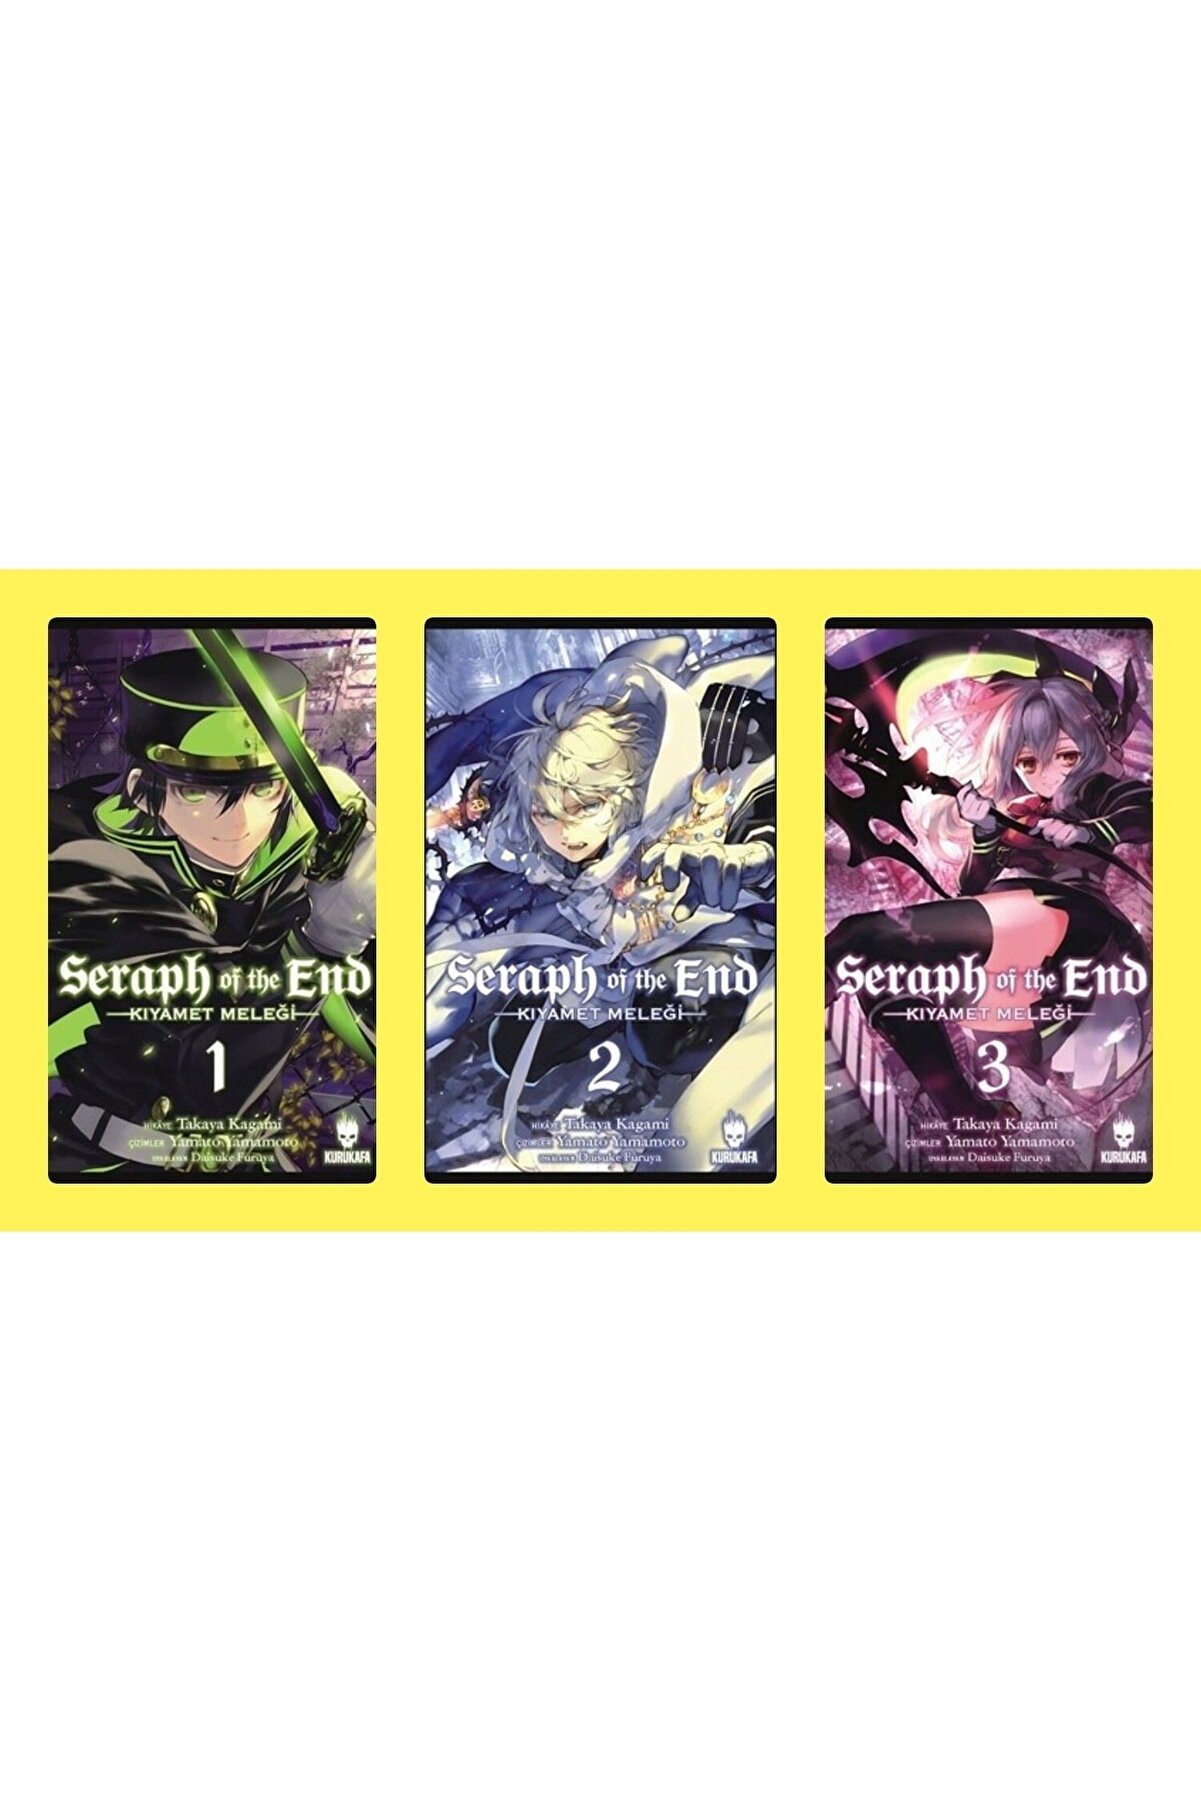 Romans En Çok Okunan Manga Serisi Seraph Of The End-kıyamet Meleği Seti 3 Kitap-takaya Kagami